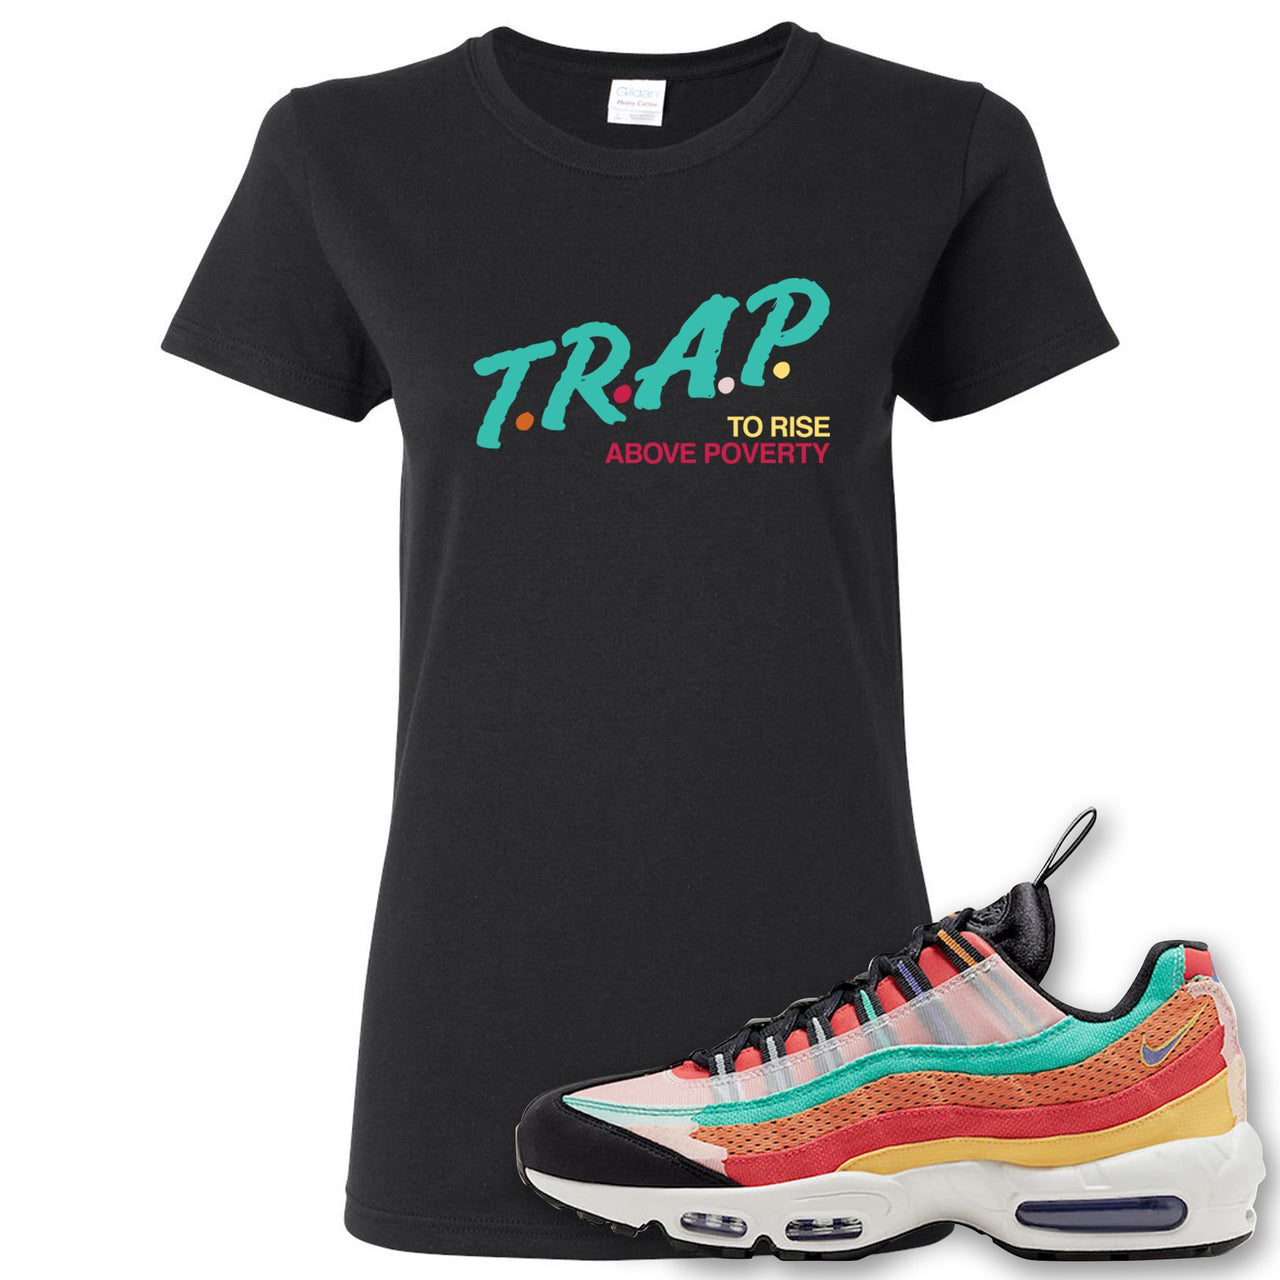 Air Max 95 Black History Month Sneaker Black Women's T Shirt | Women's Tees to match Nike Air Max 95 Black History Month Shoes | Trap To Rise Above Poverty